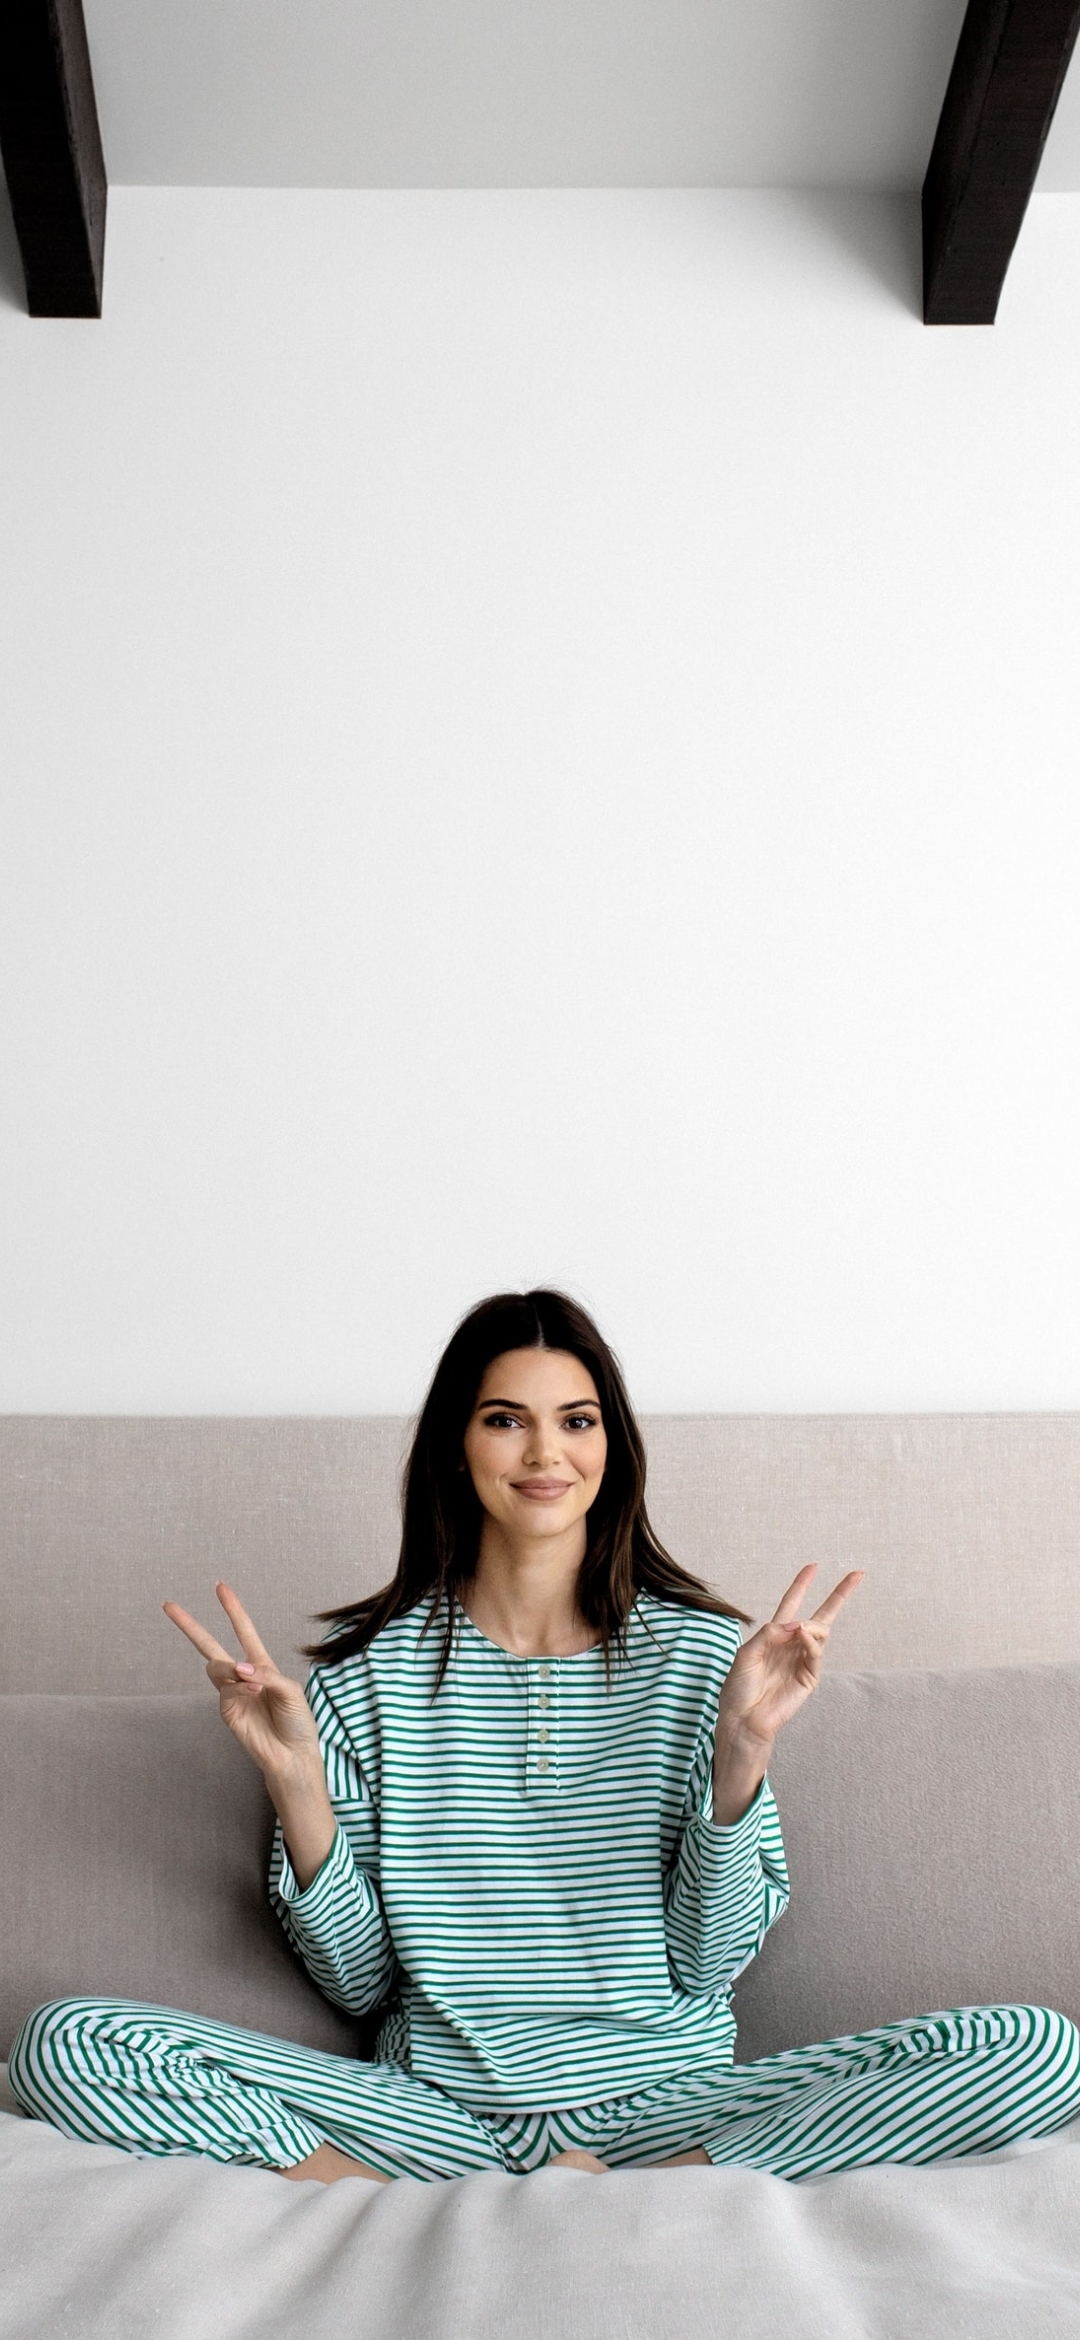 1080x2340 Kendall Jenner Home Photoshoot 2020 1080x2340 Resolution Wallpaper Hd Celebrities 4k 